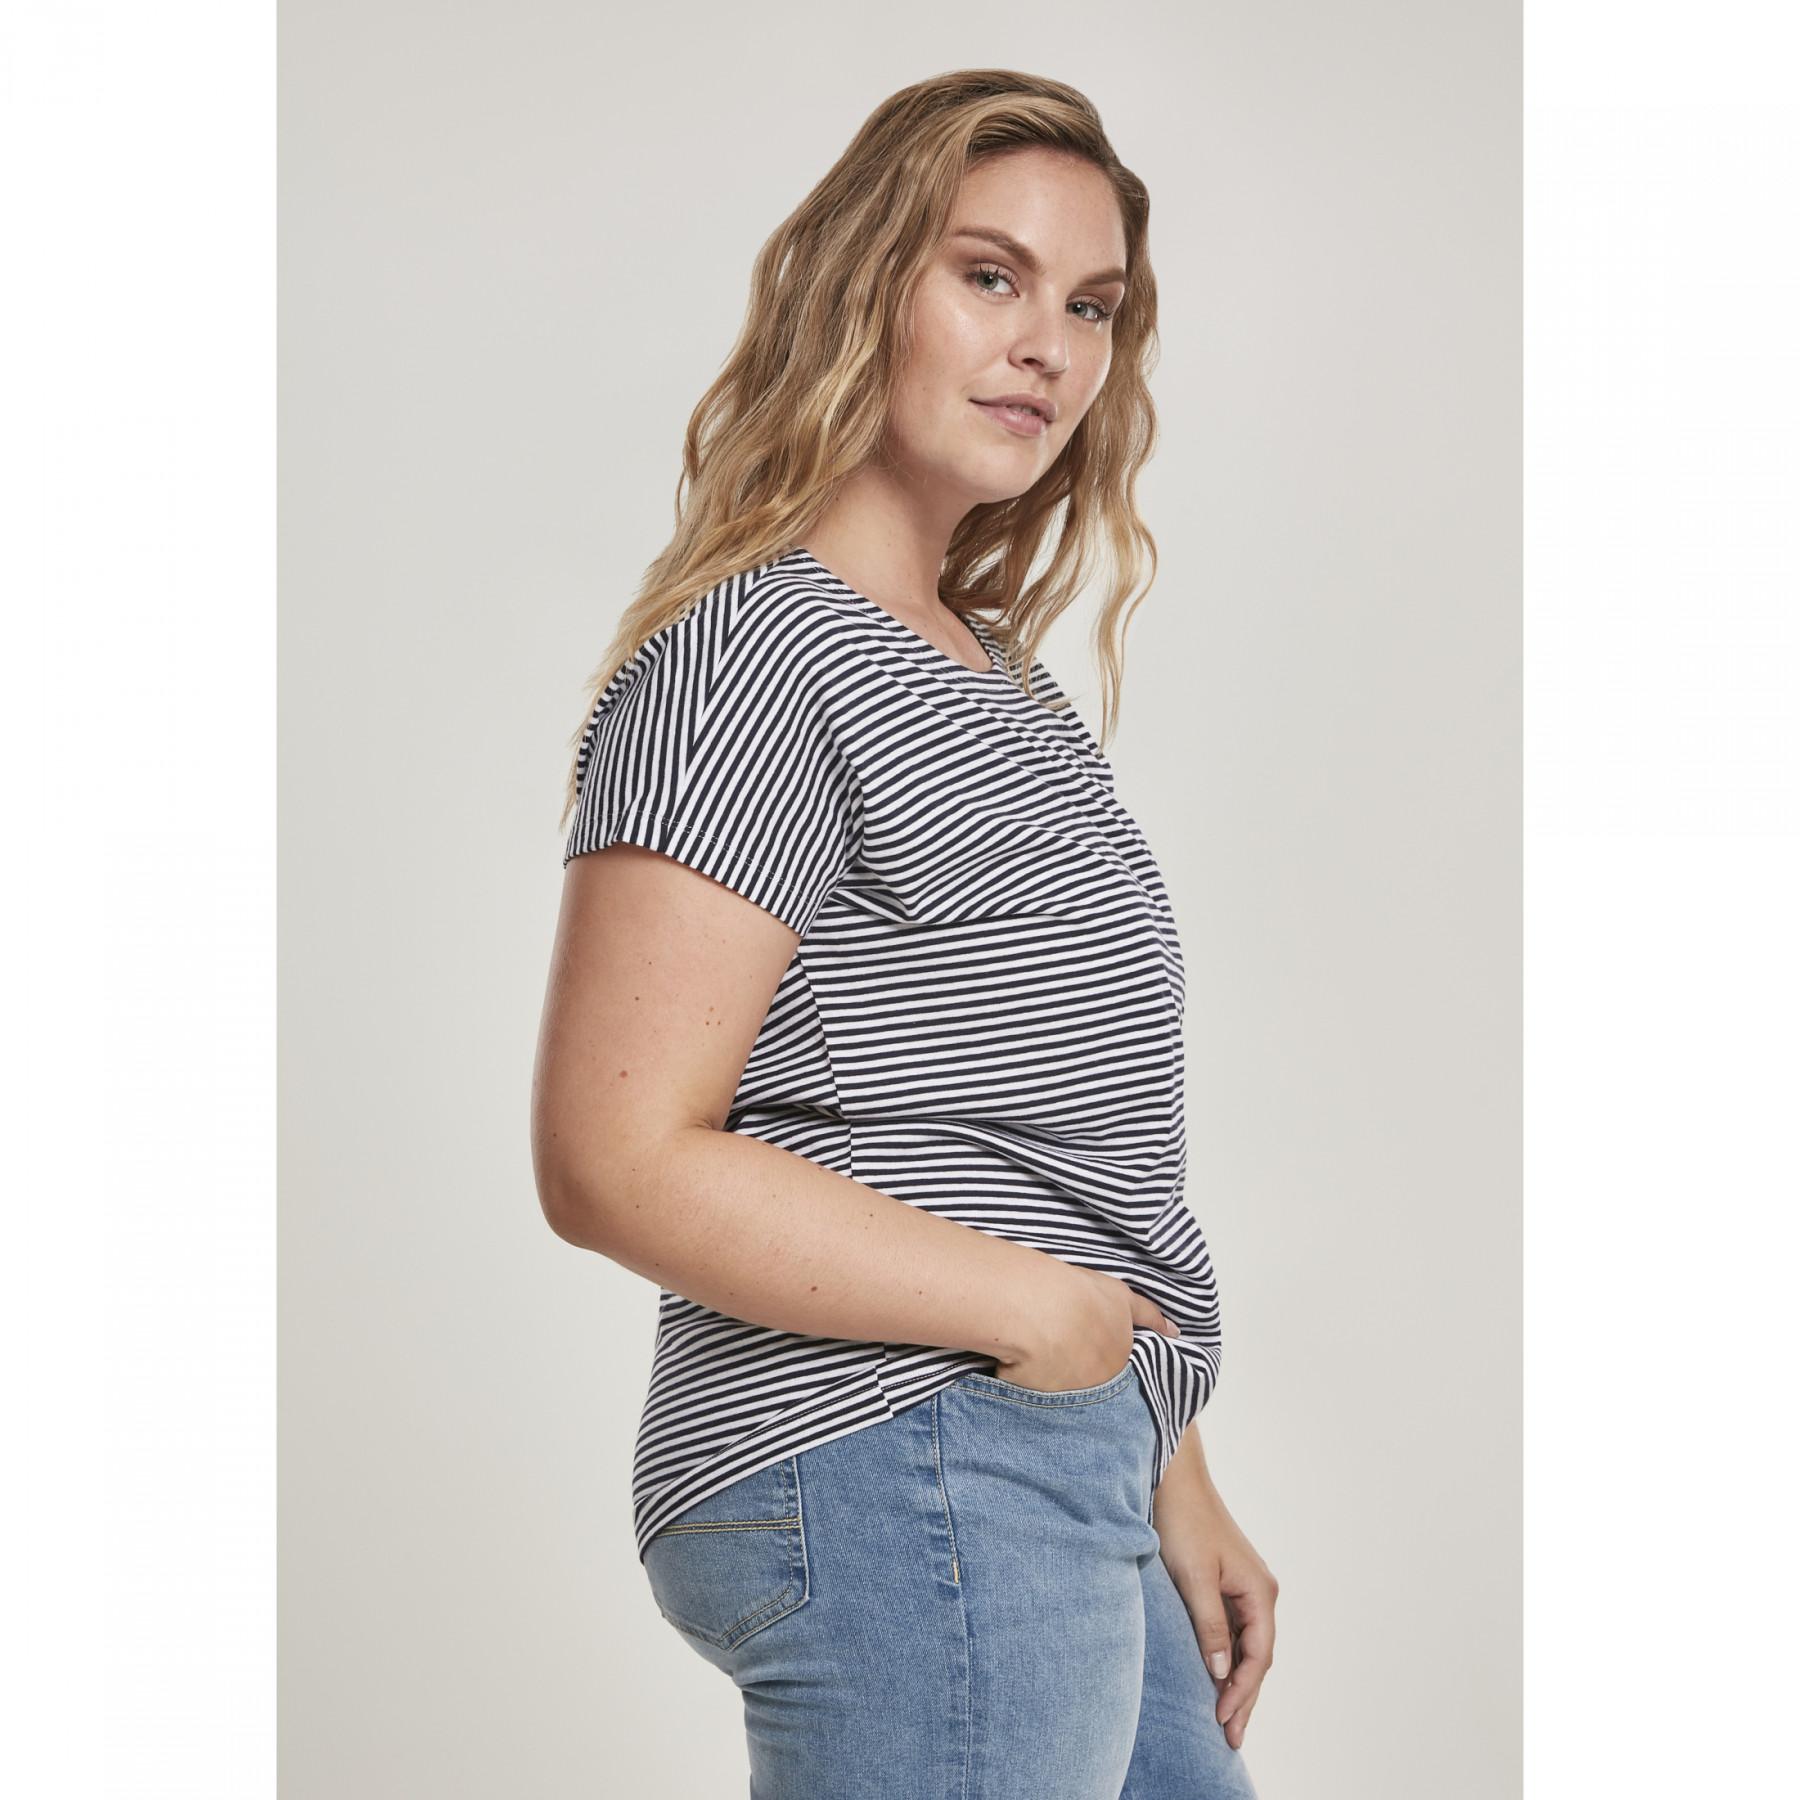 T-shirt femme grandes tailles Urban Classic yarn baby Stripe